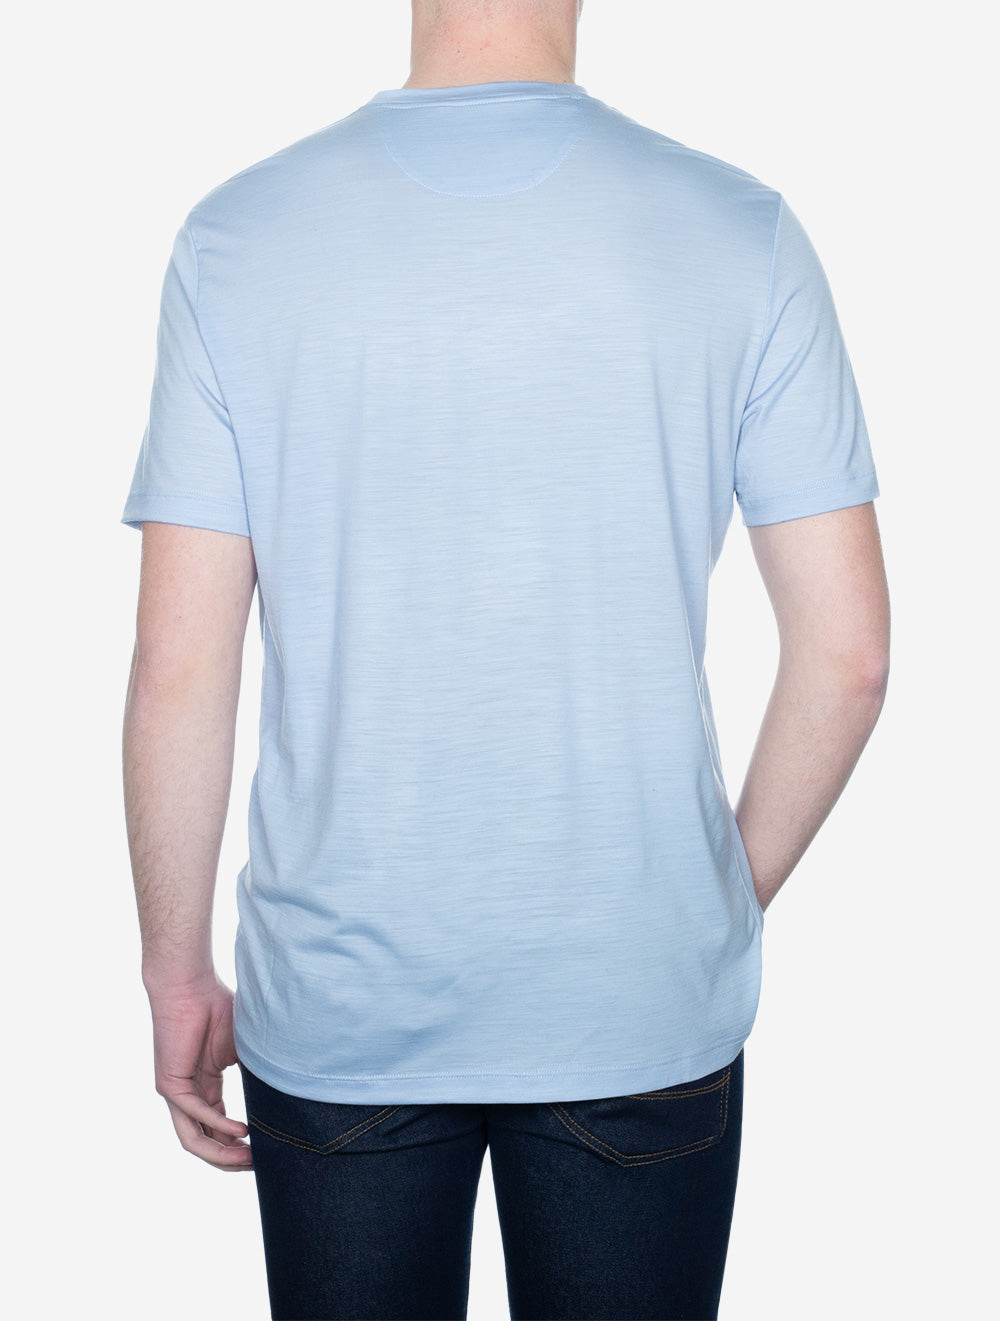 T-Shirt Short Sleeves Blue Turquoise